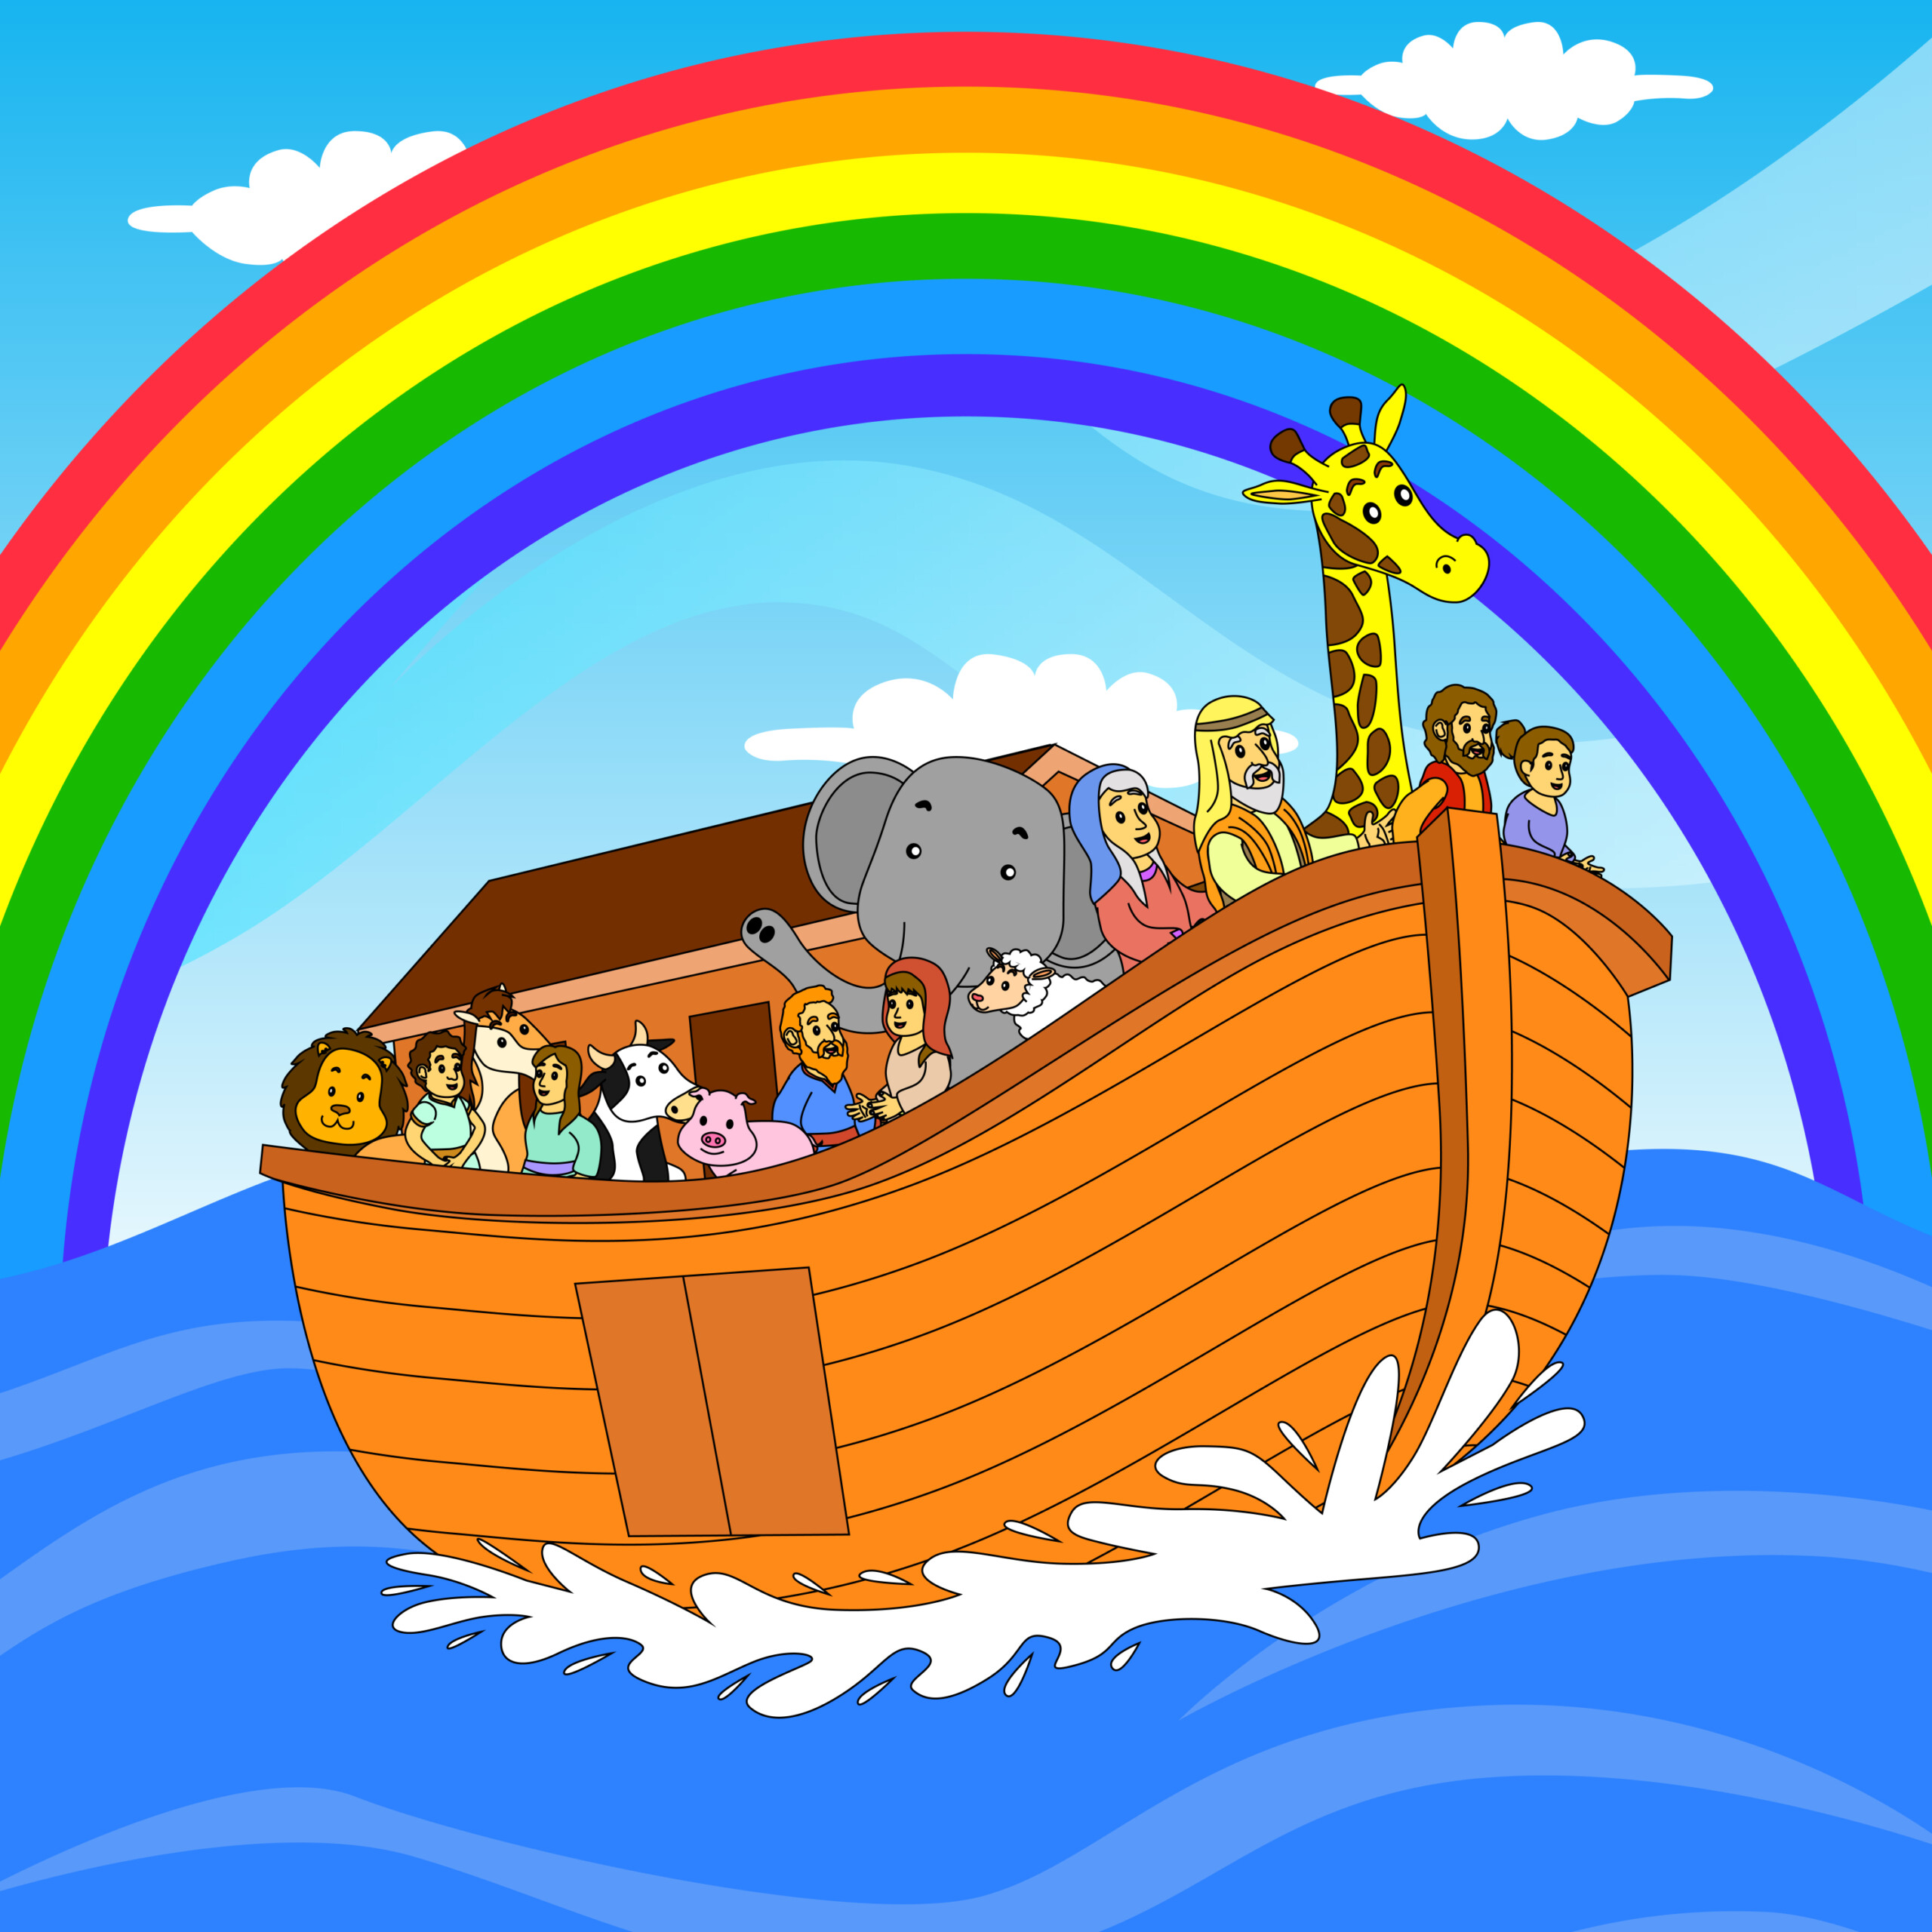 Noah And The Ark - Original image